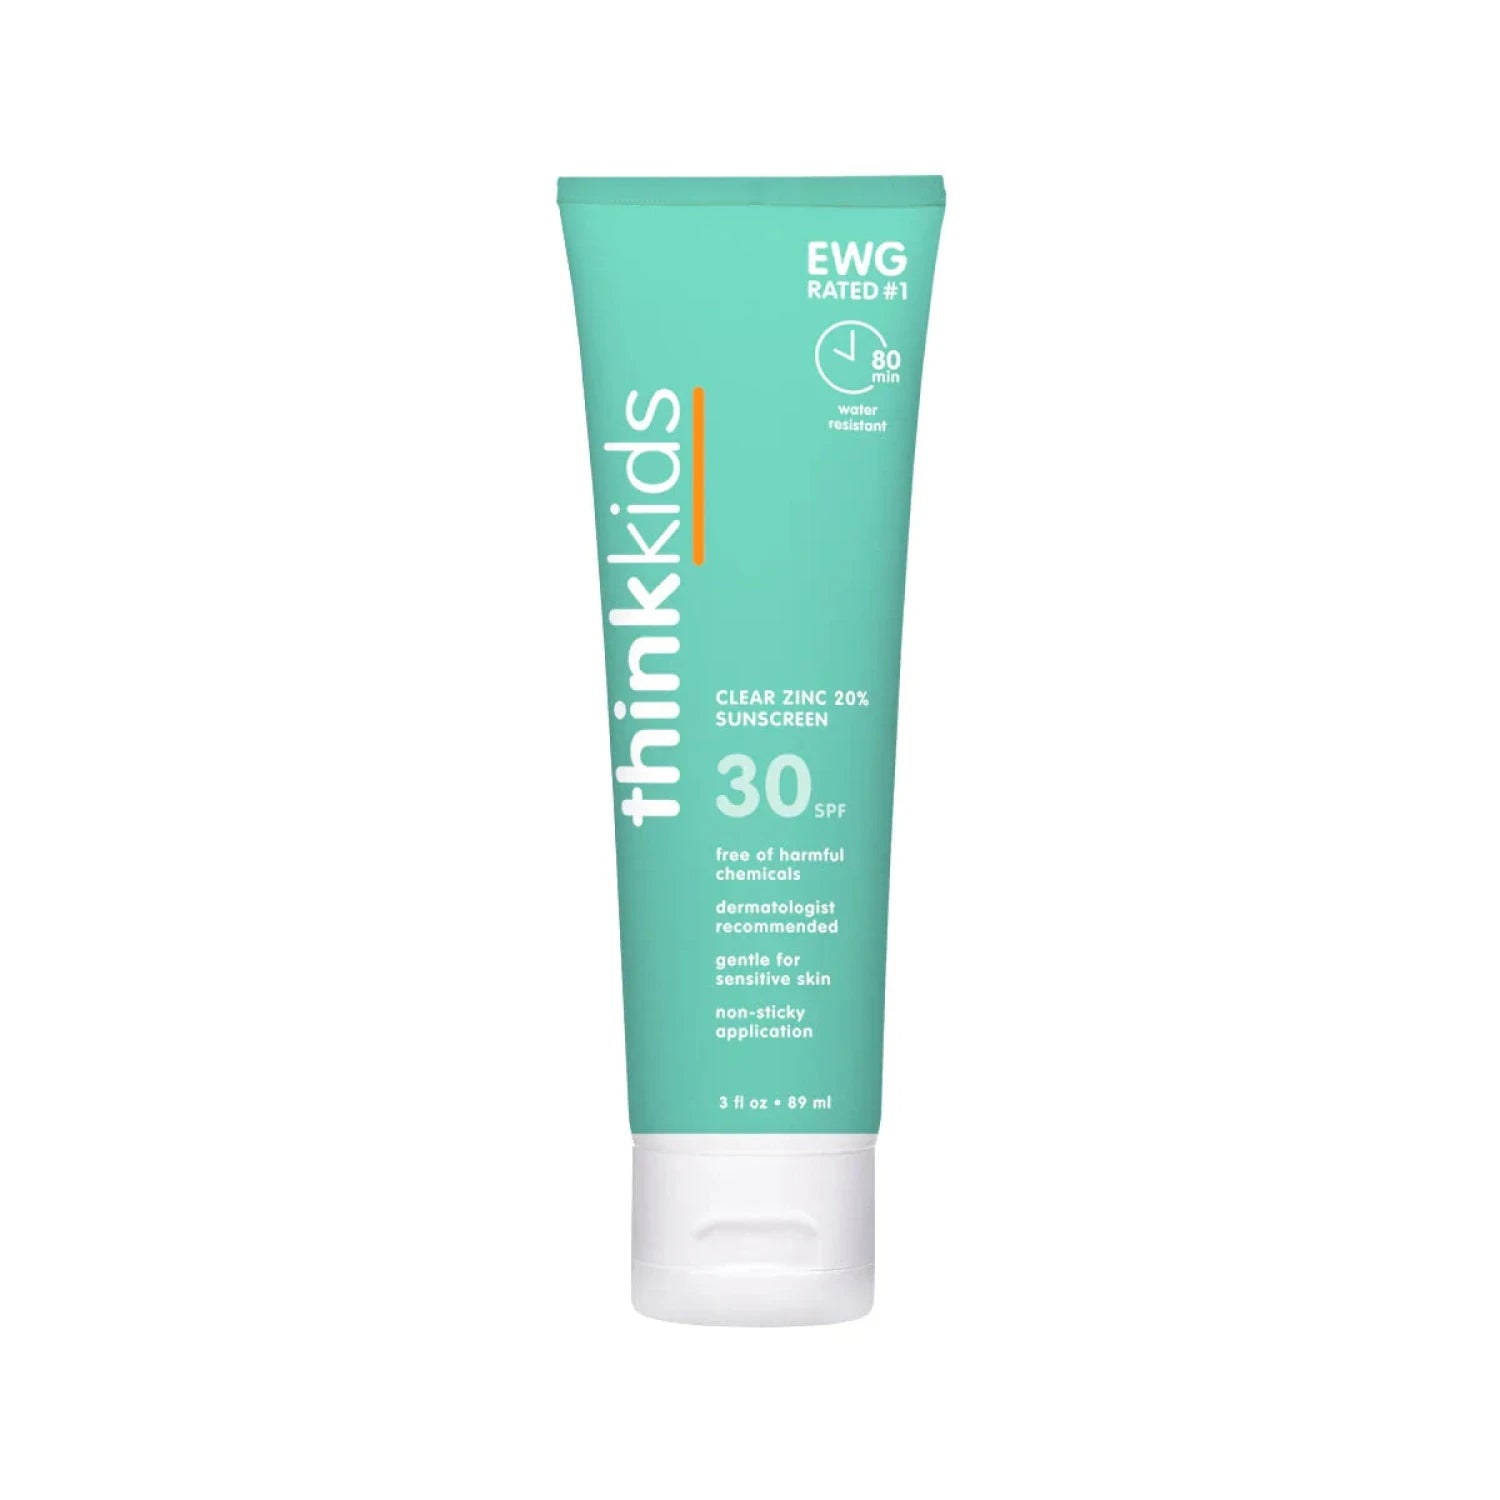 Thinksport Kid's SPF 30 Clear Zinc Sunscreen.